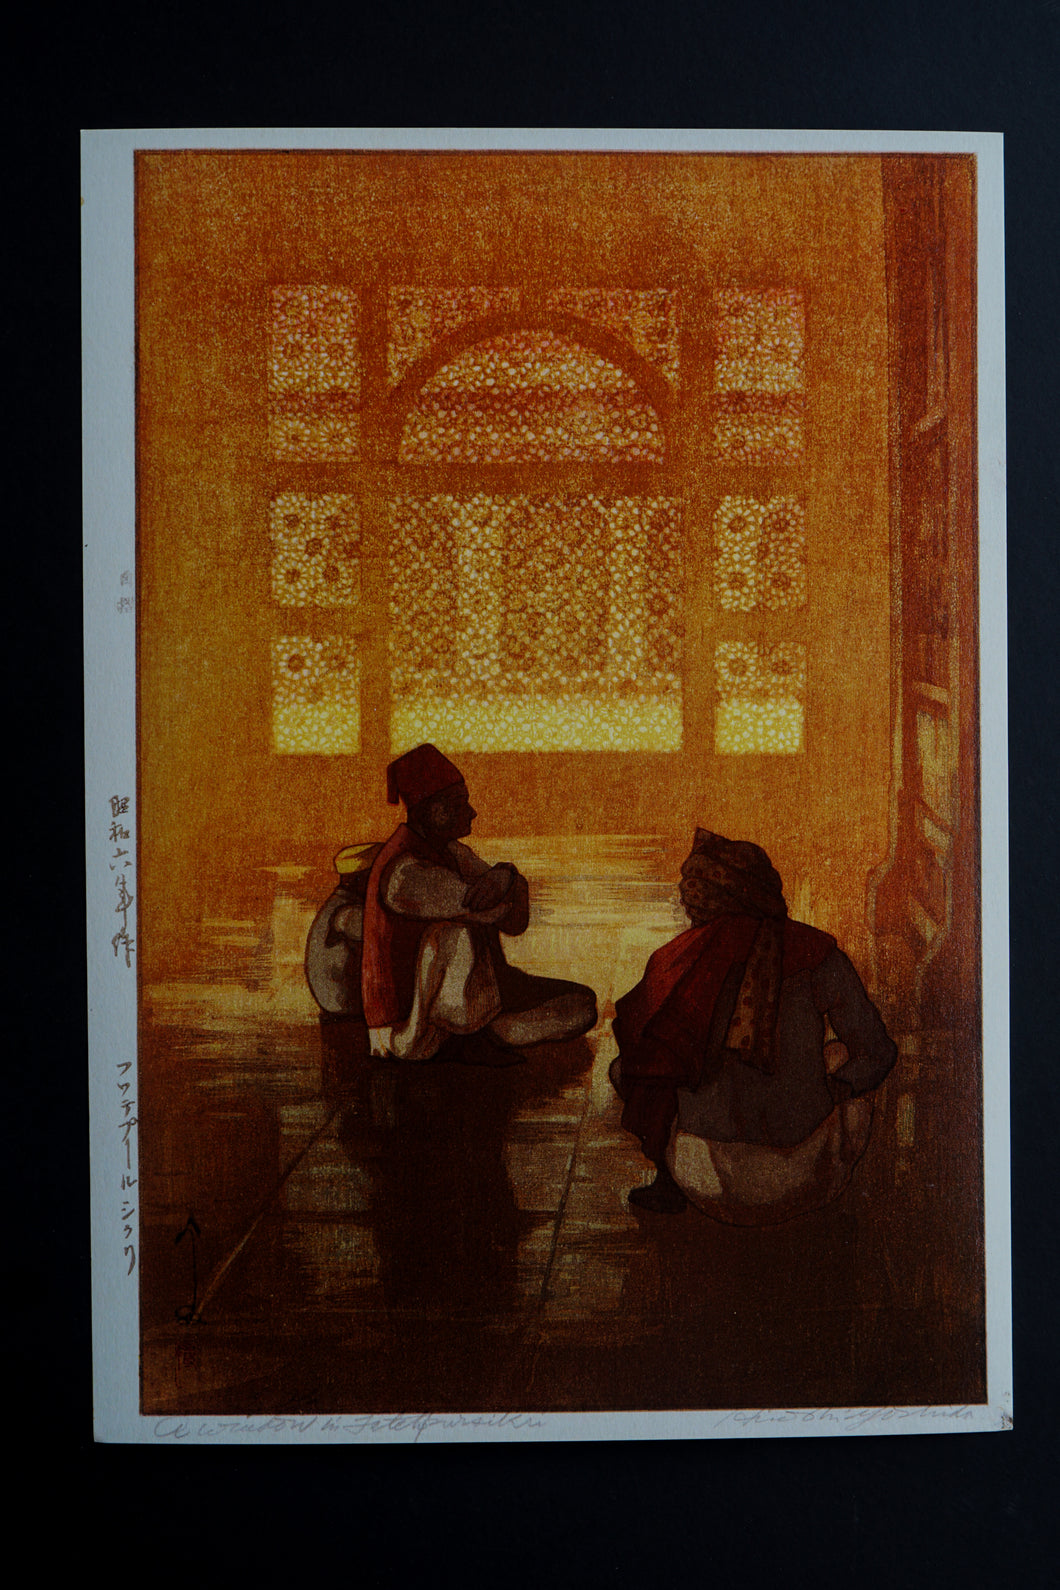 Daak Art Print - Jaali at Fatehpur Sikri by Hiroshi Yoshida